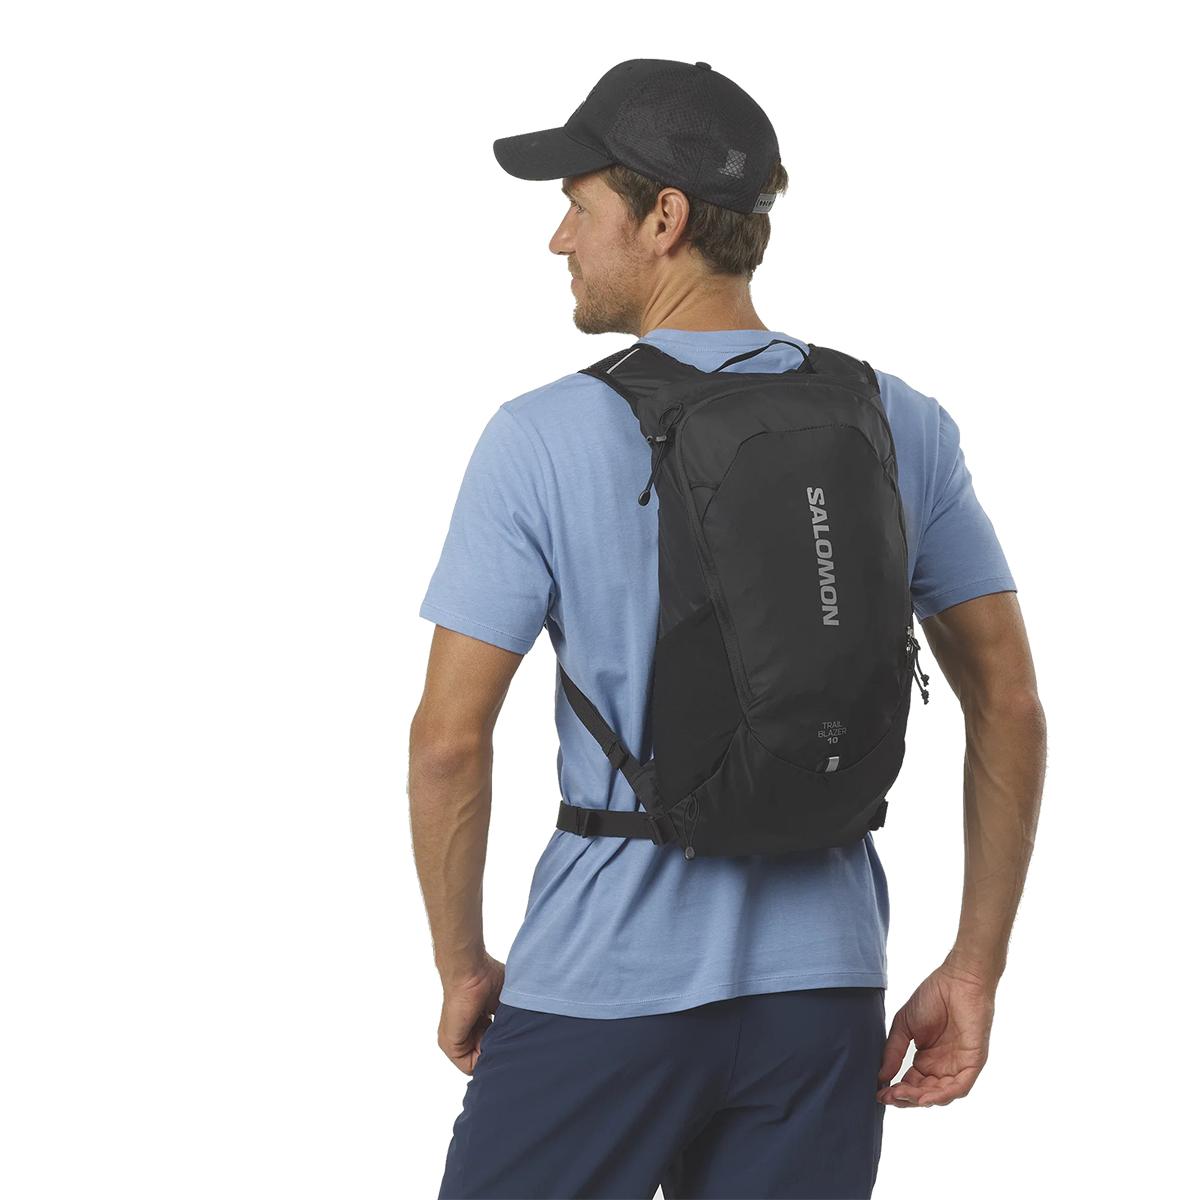 Salomon Trailblazer 10L Backpack